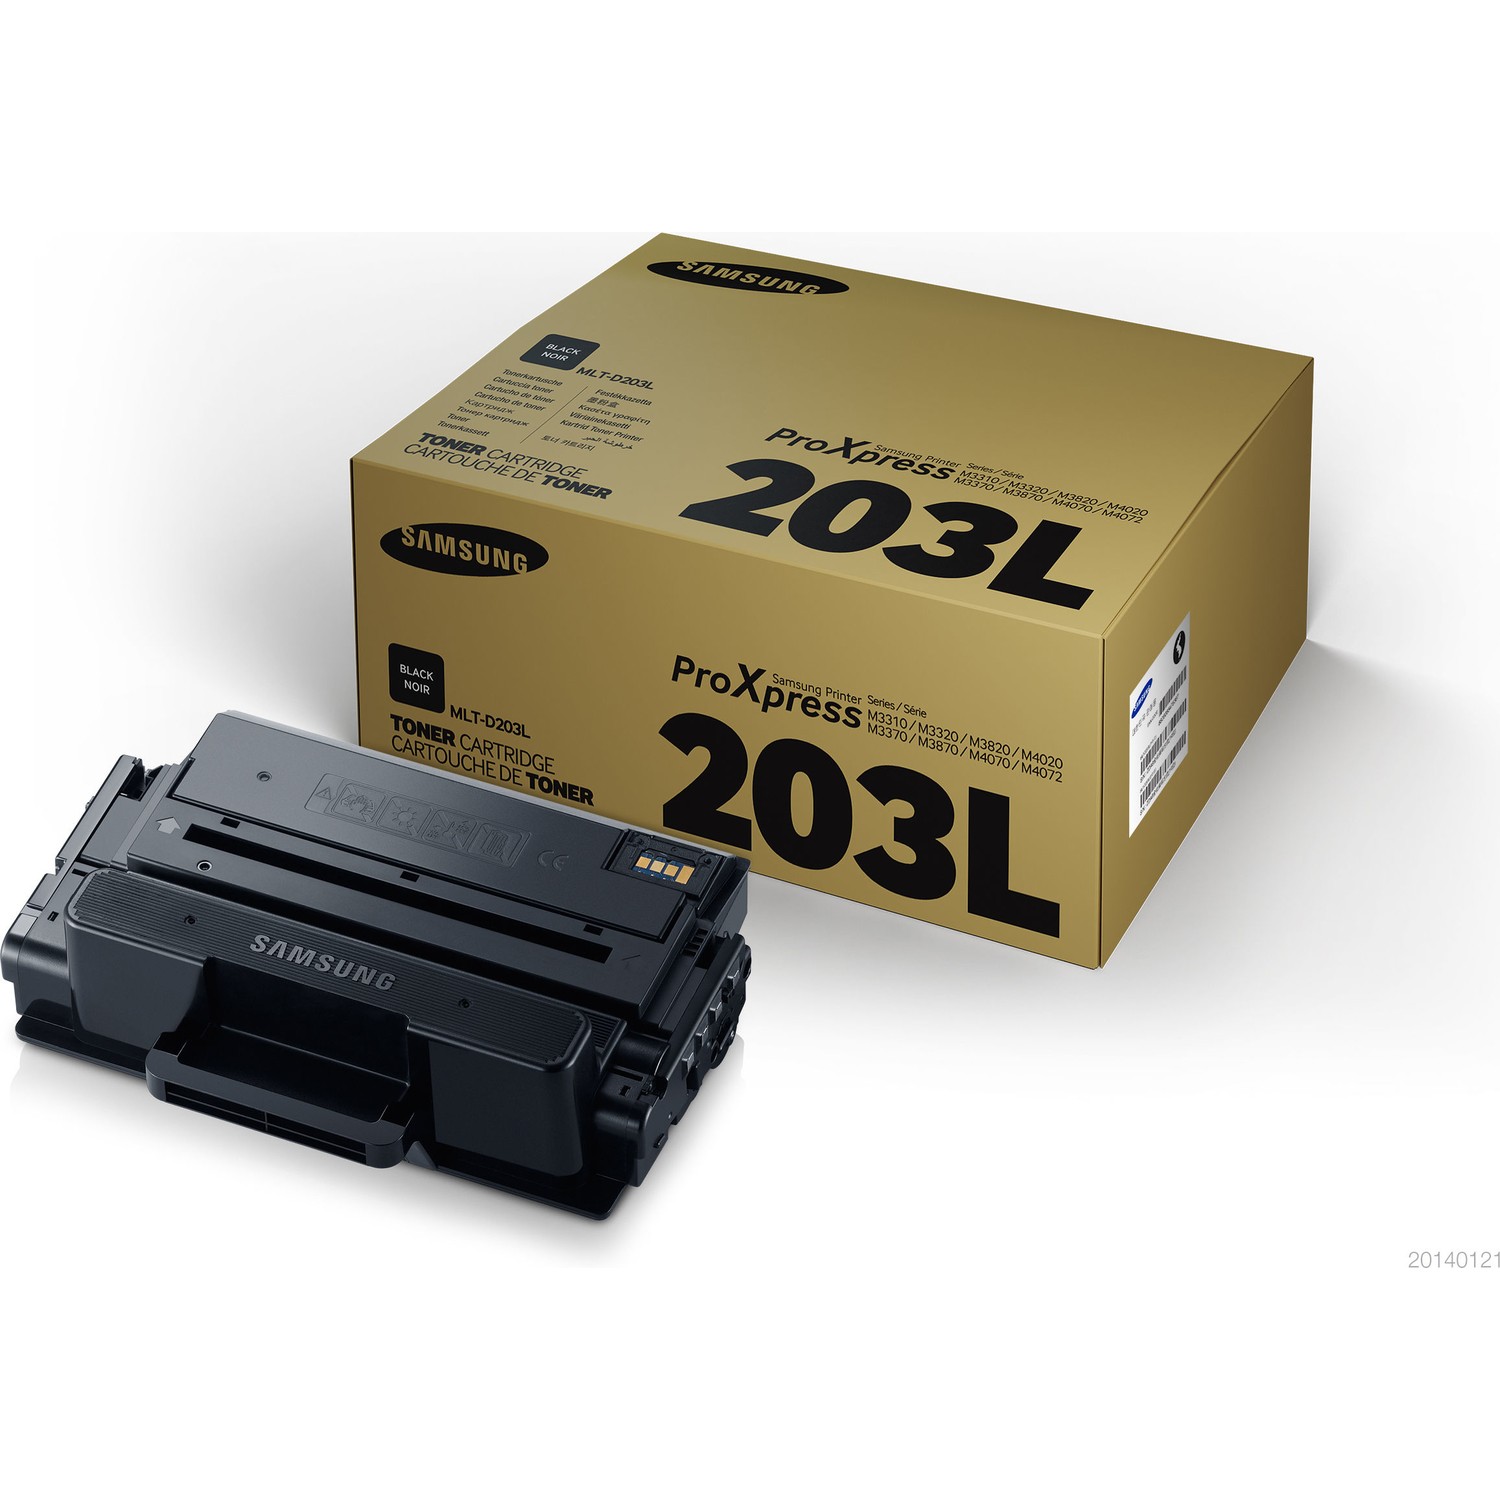  ProXpress M3370FD TONER 5000 Siyah Fiyatı